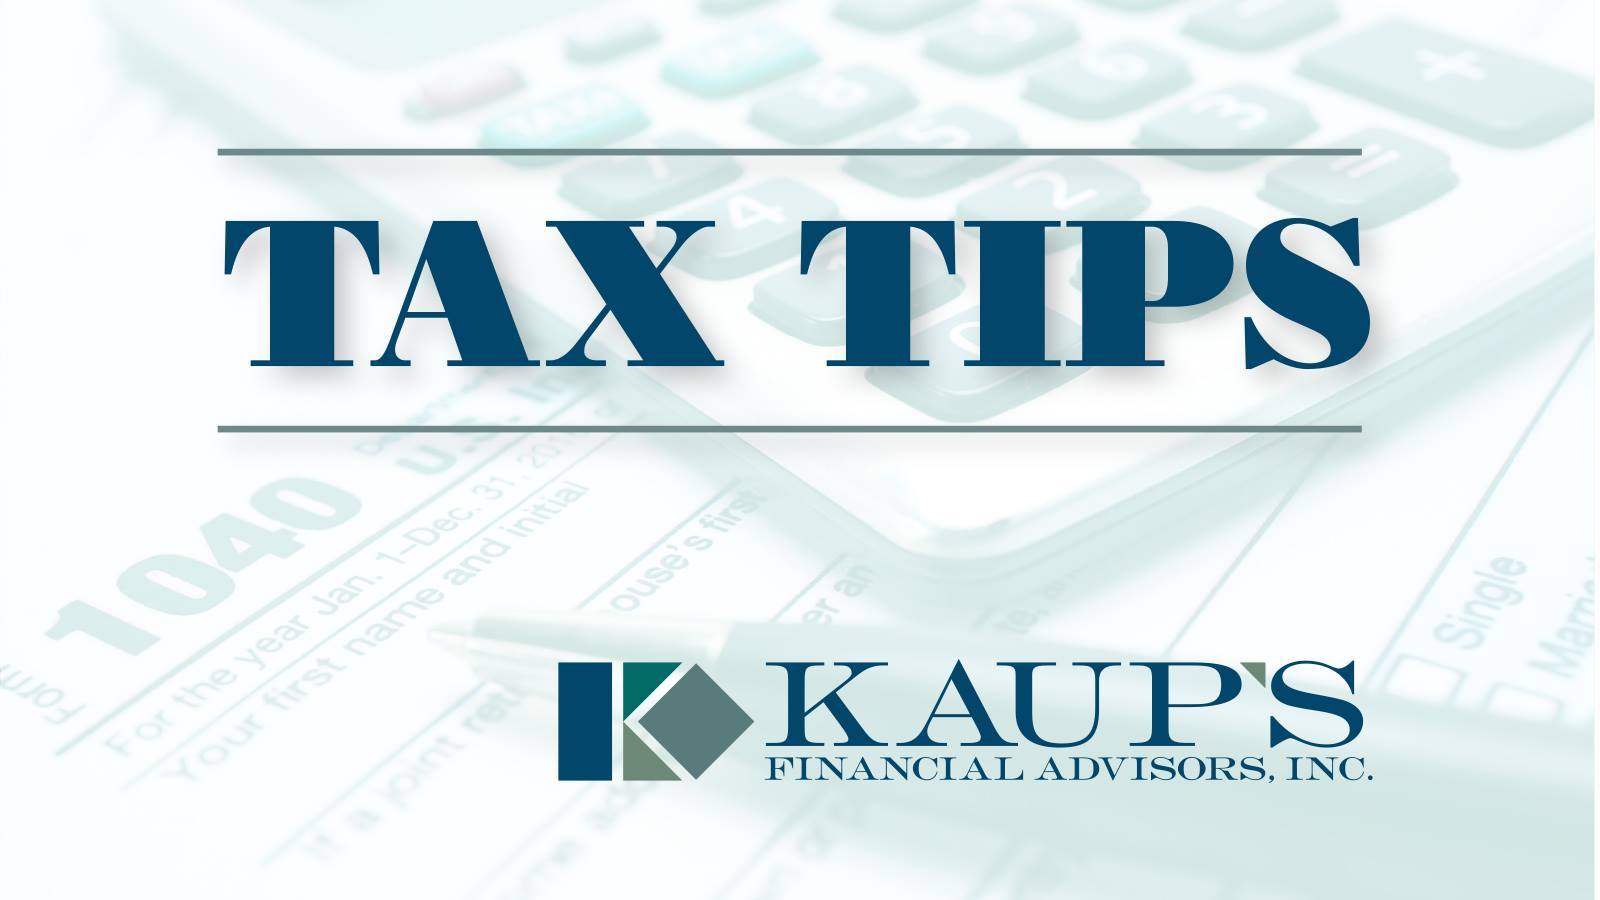 Kaup's Financial Advisors Inc 113 N Main St, Stuart Nebraska 68780